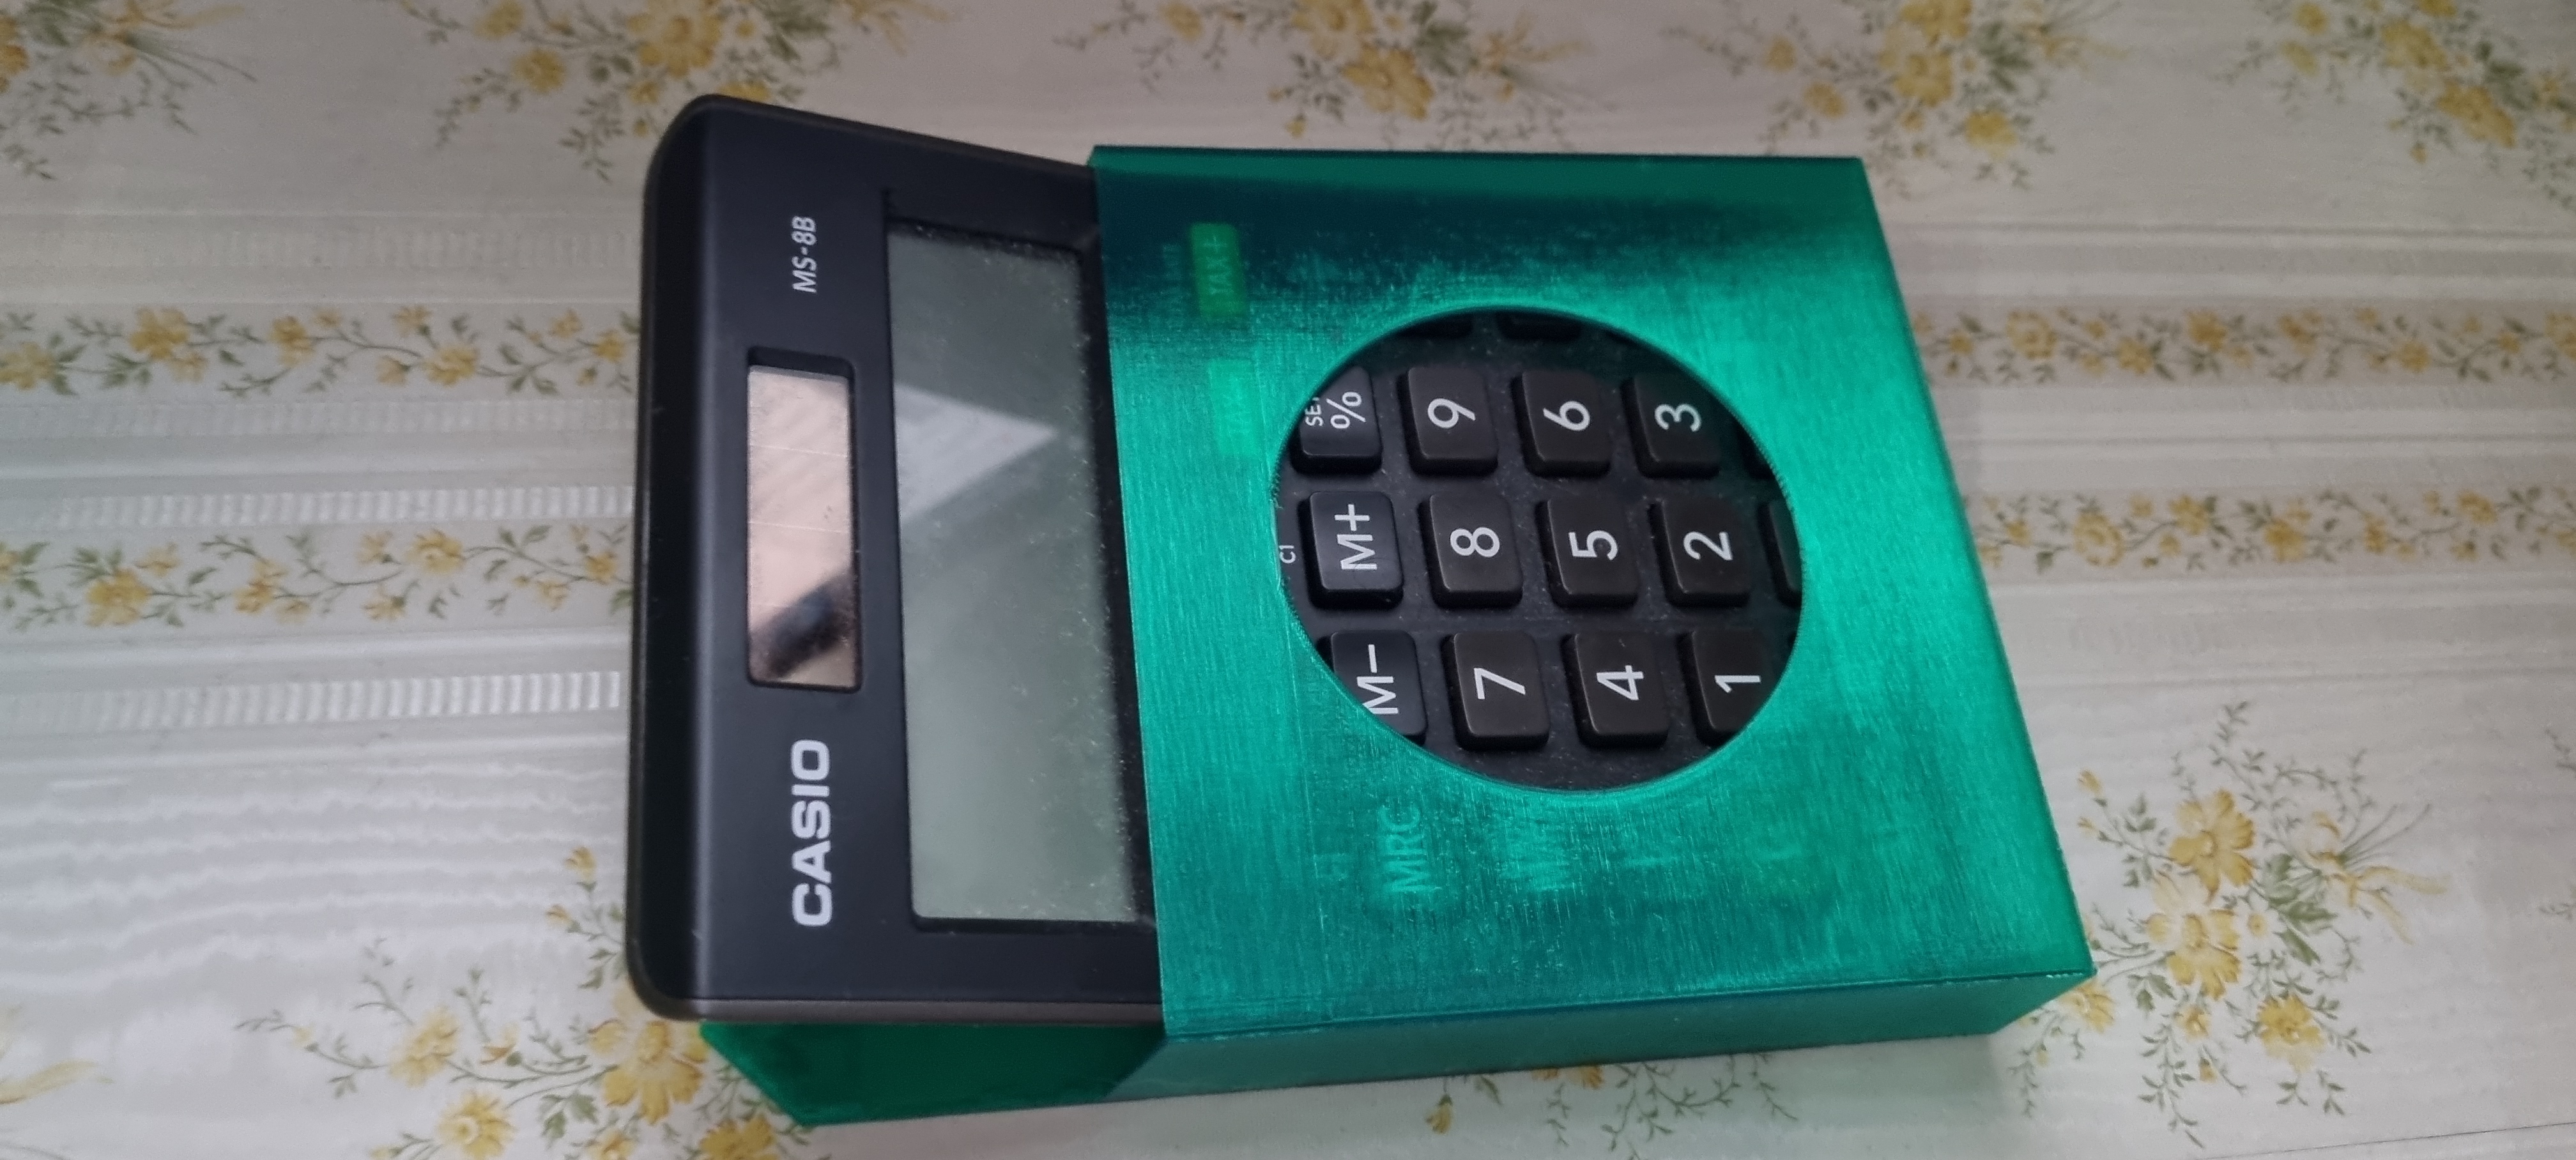 Calculator holder